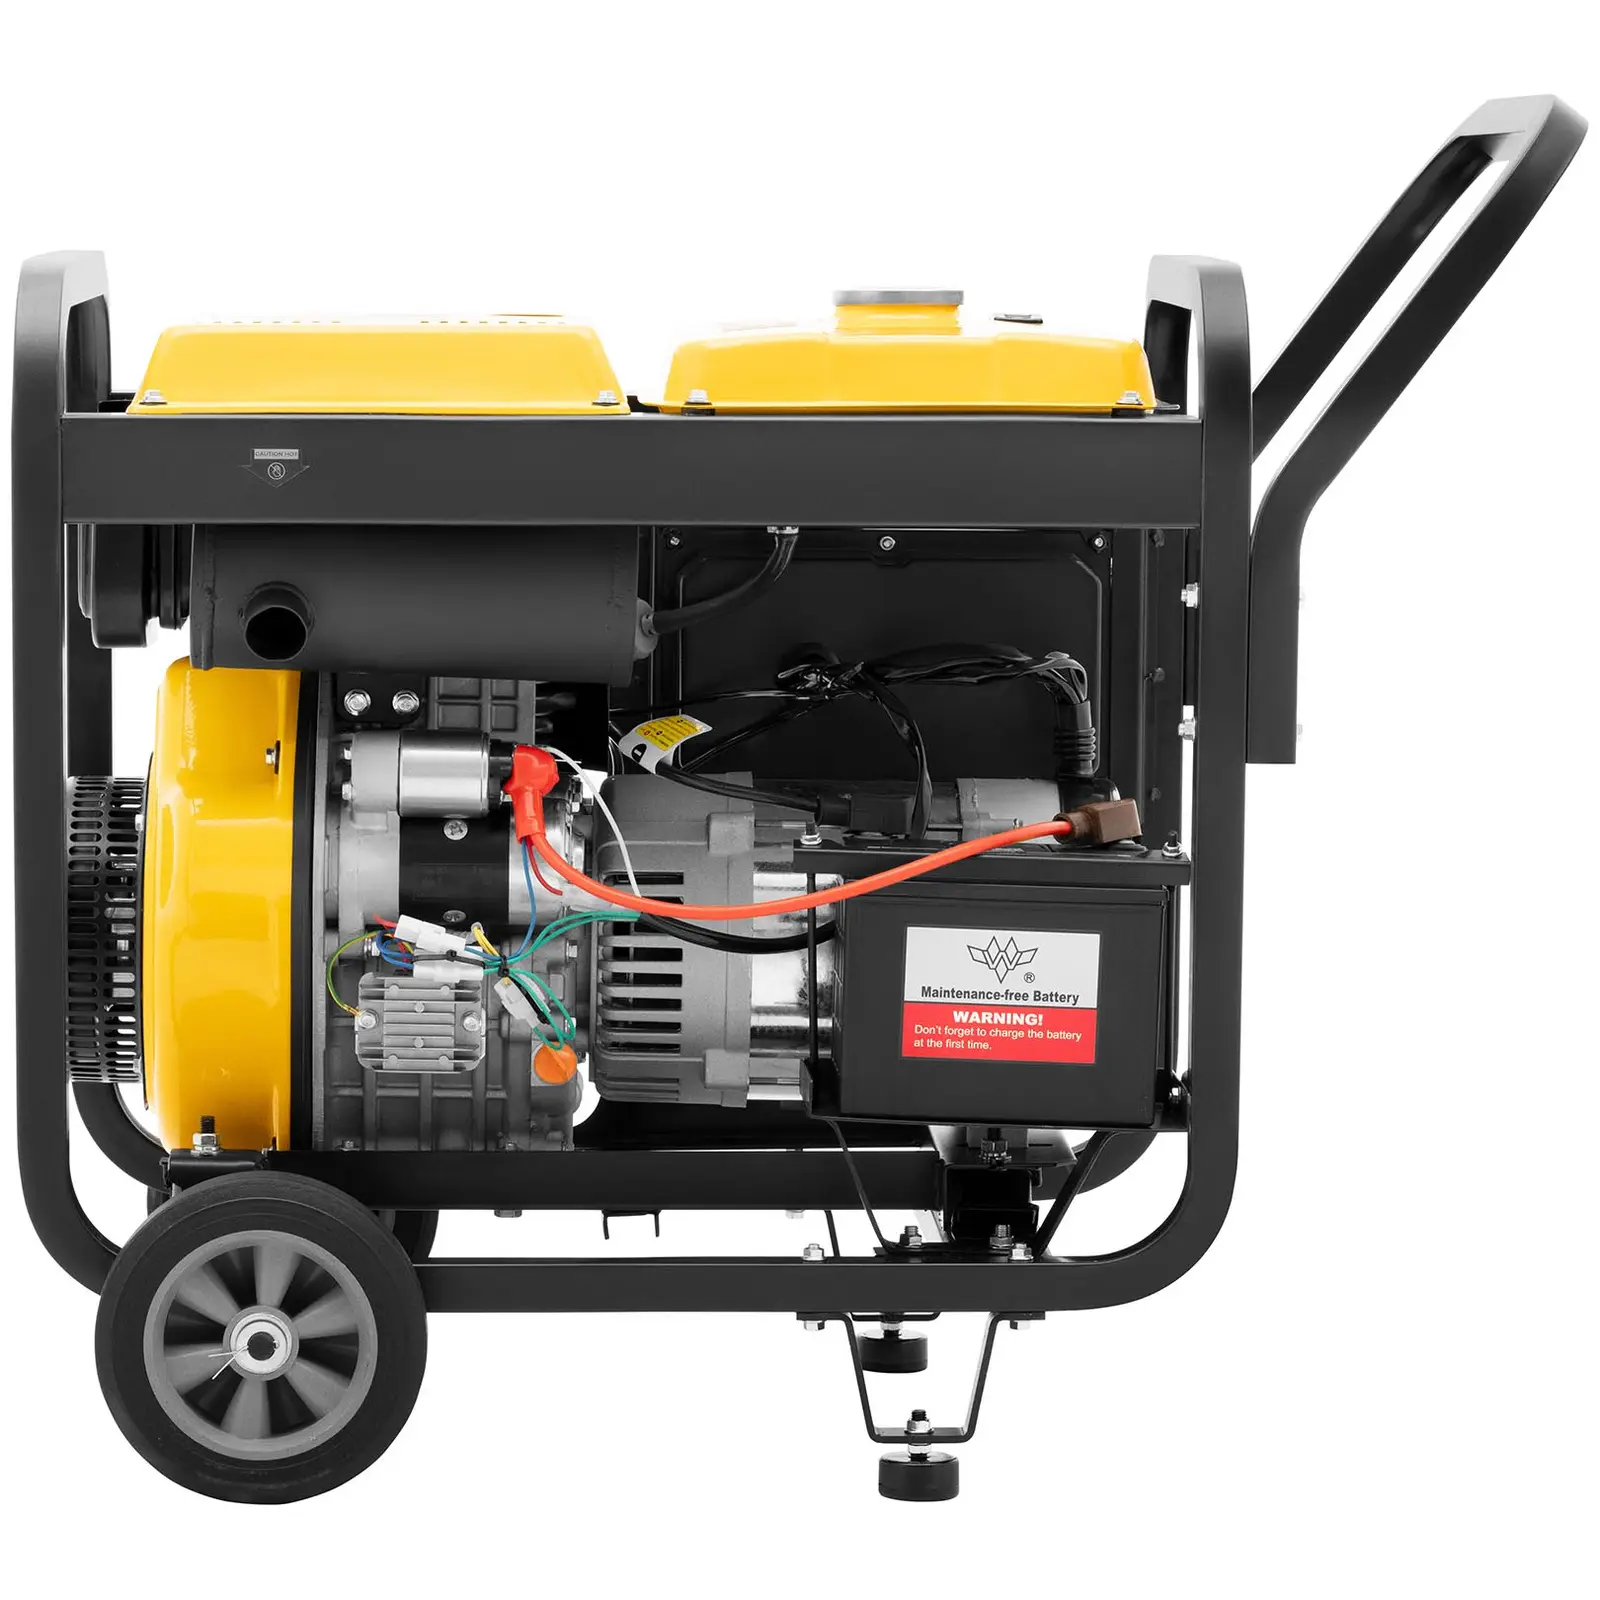 Notstromaggregat Diesel - 2500 / 7500 W - 12,5 L - 230/400 V - mobil - AVR - Euro 5